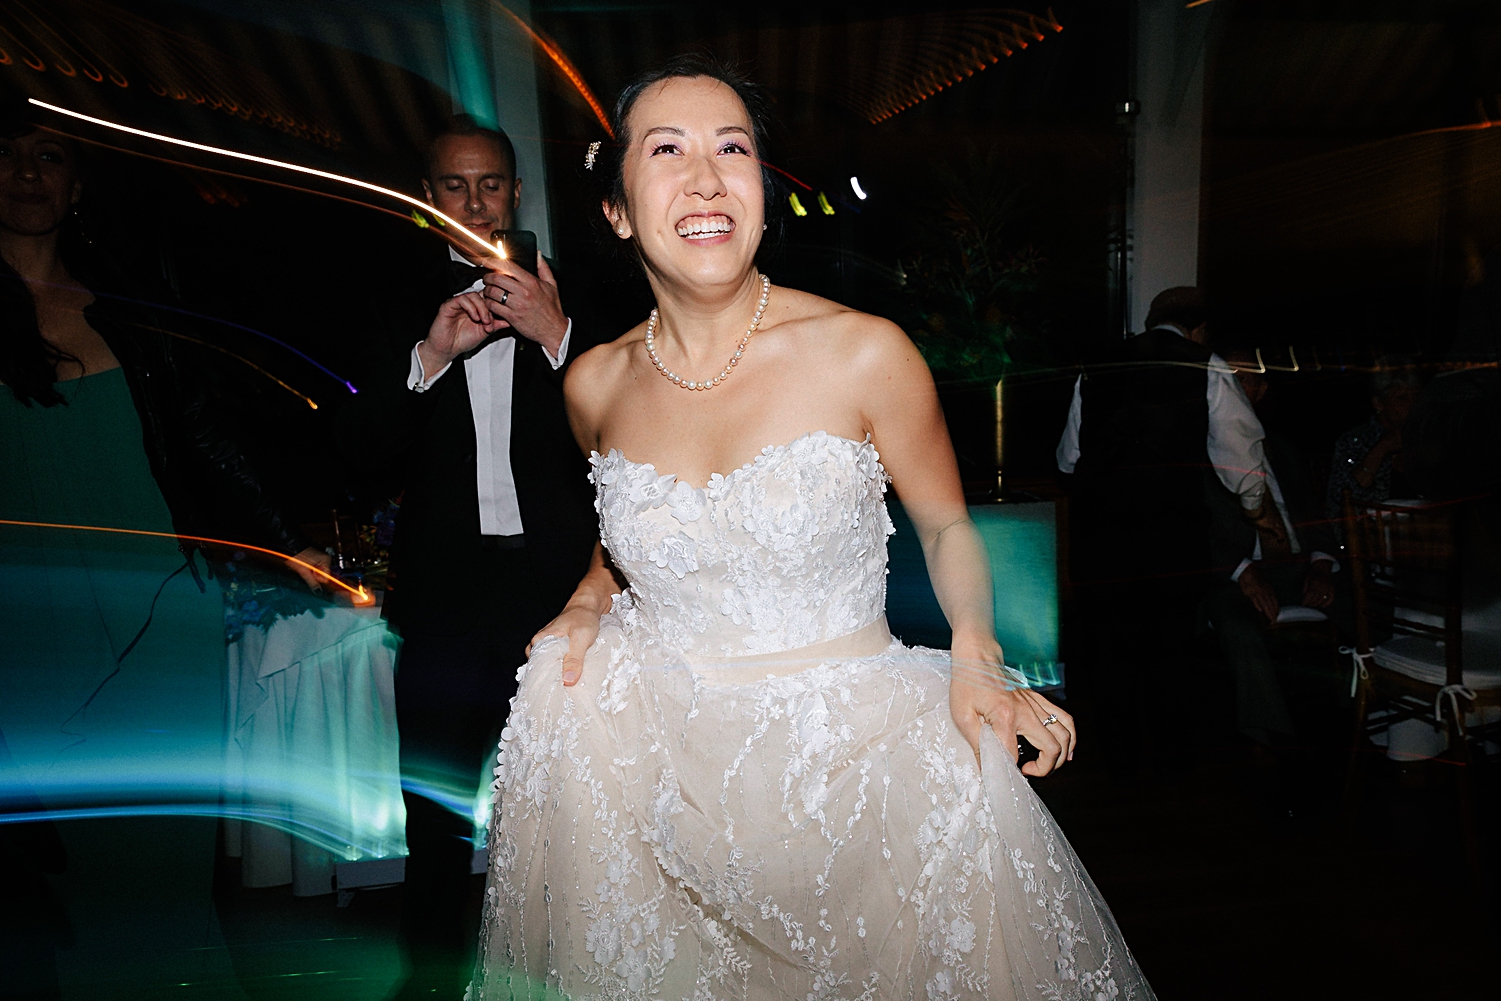 bride in wedding dress dancing at reception